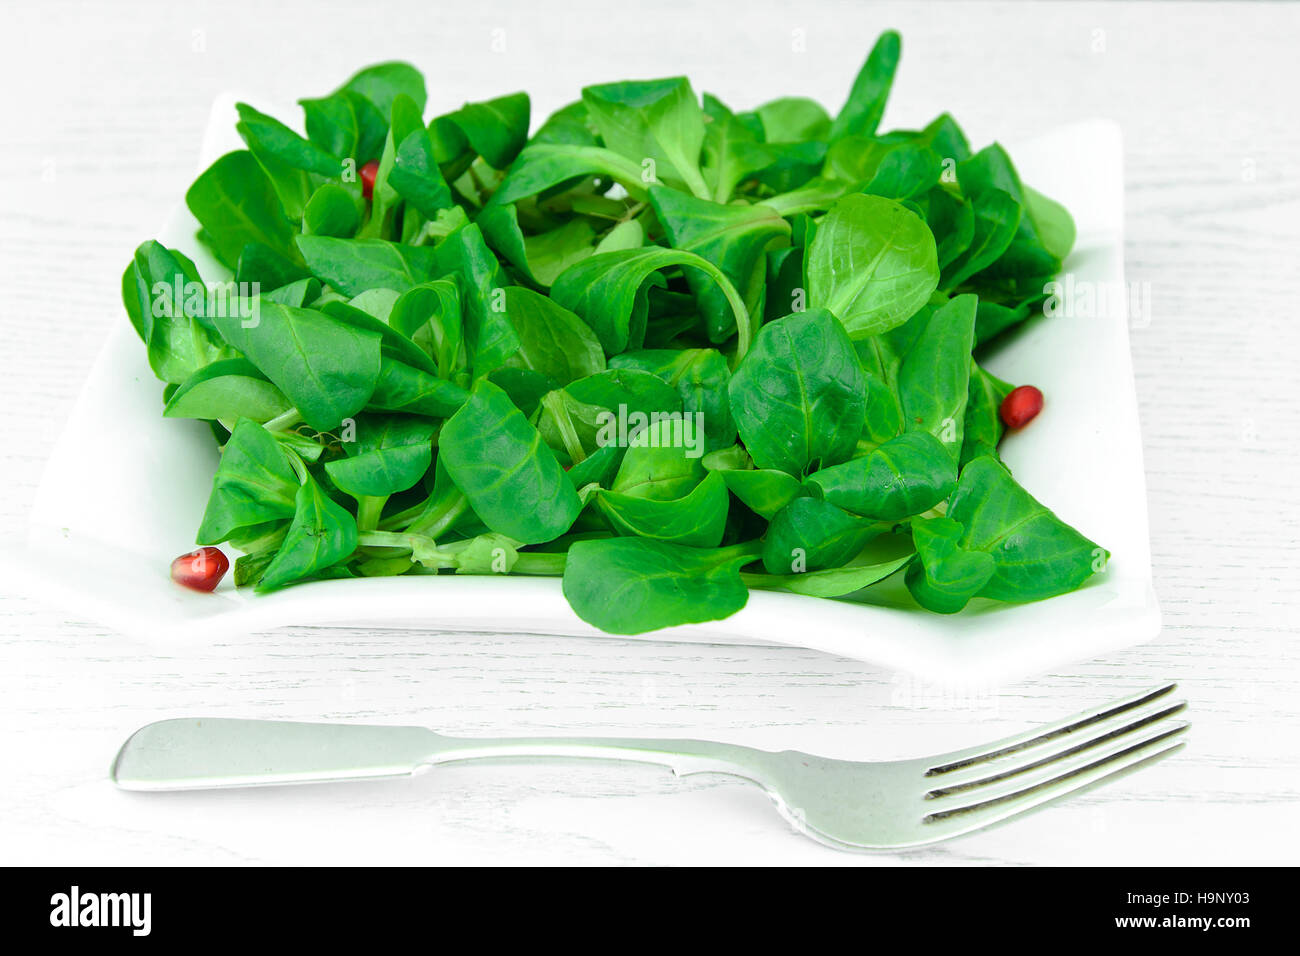 Green Fresh Salad on Plate. Stock Photo